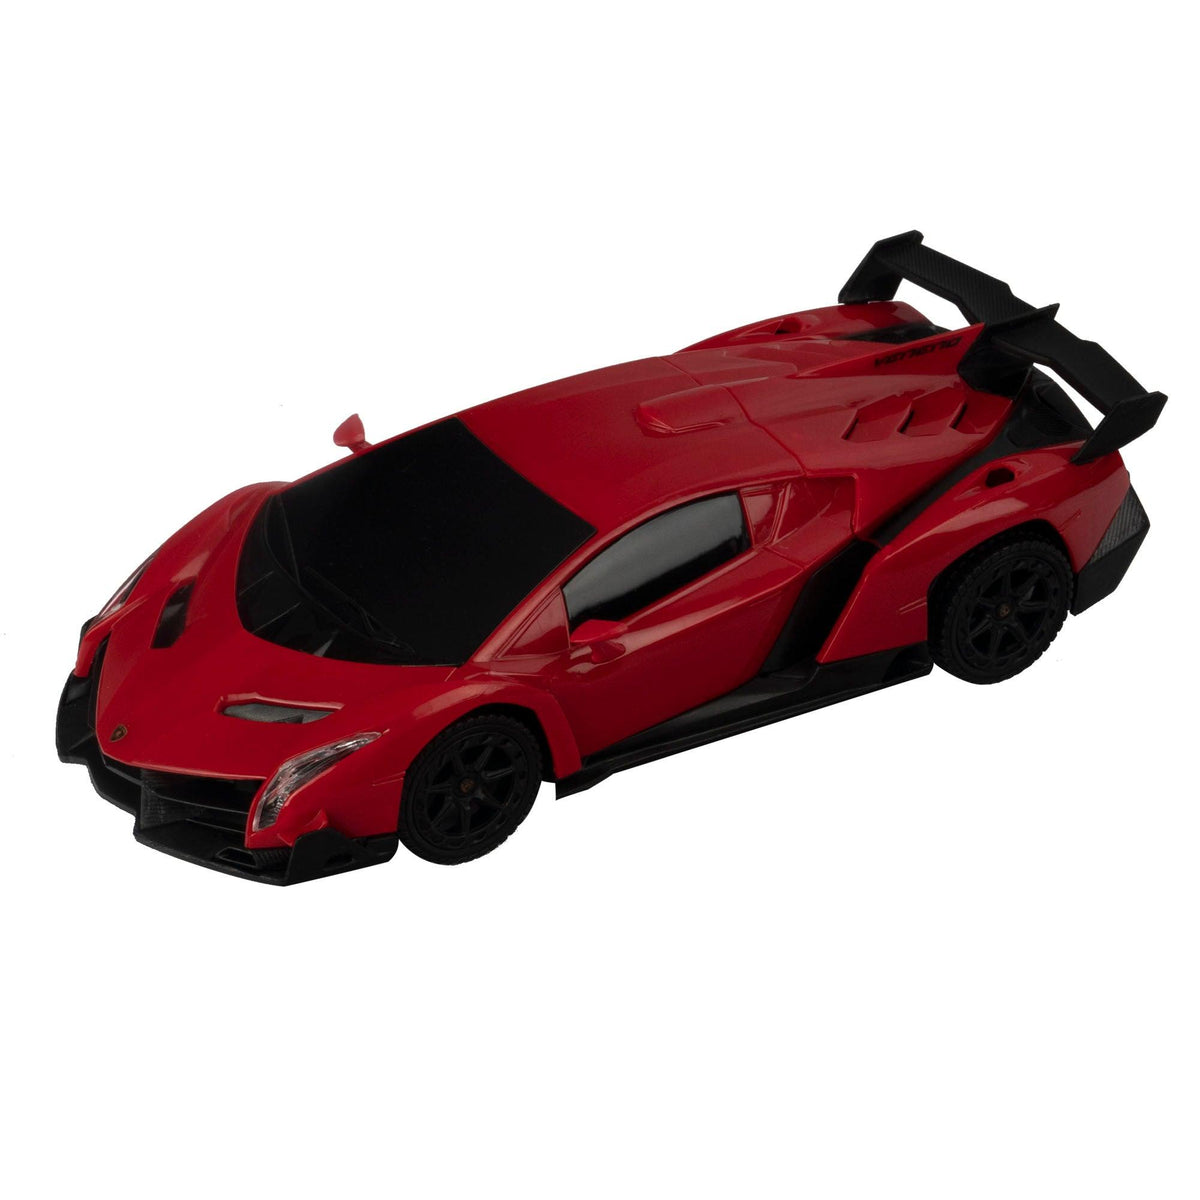 Lamborghini Veneno &amp; Sesto Elemento Frciation Car Set | Pack of 2 - Choice Stores